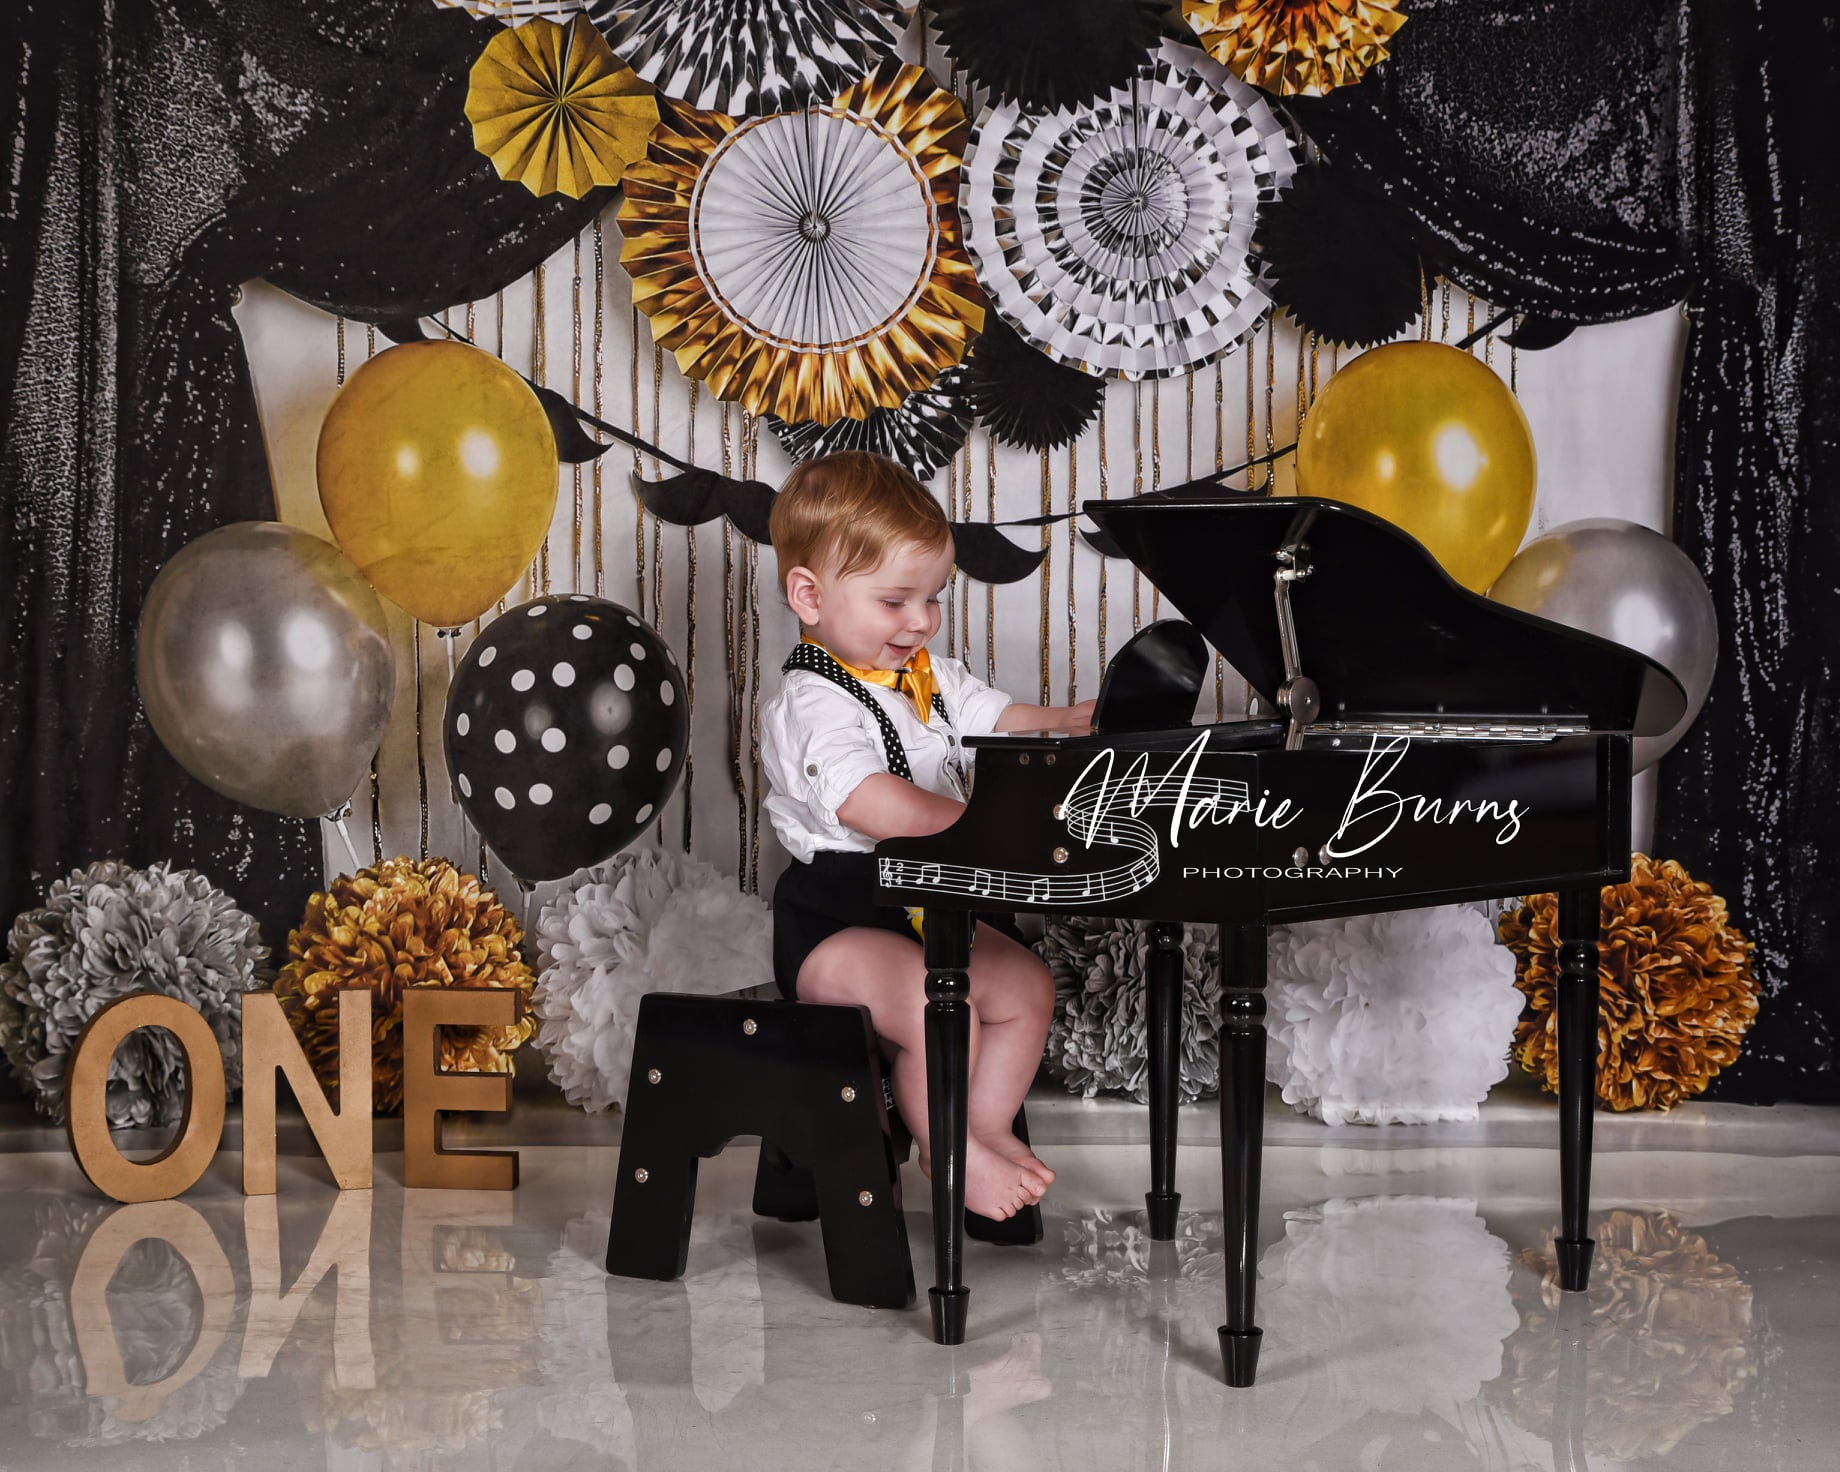 Kate Mr. Onederful 1st Birthday Backdrop Designed By Mandy Ringe Photography